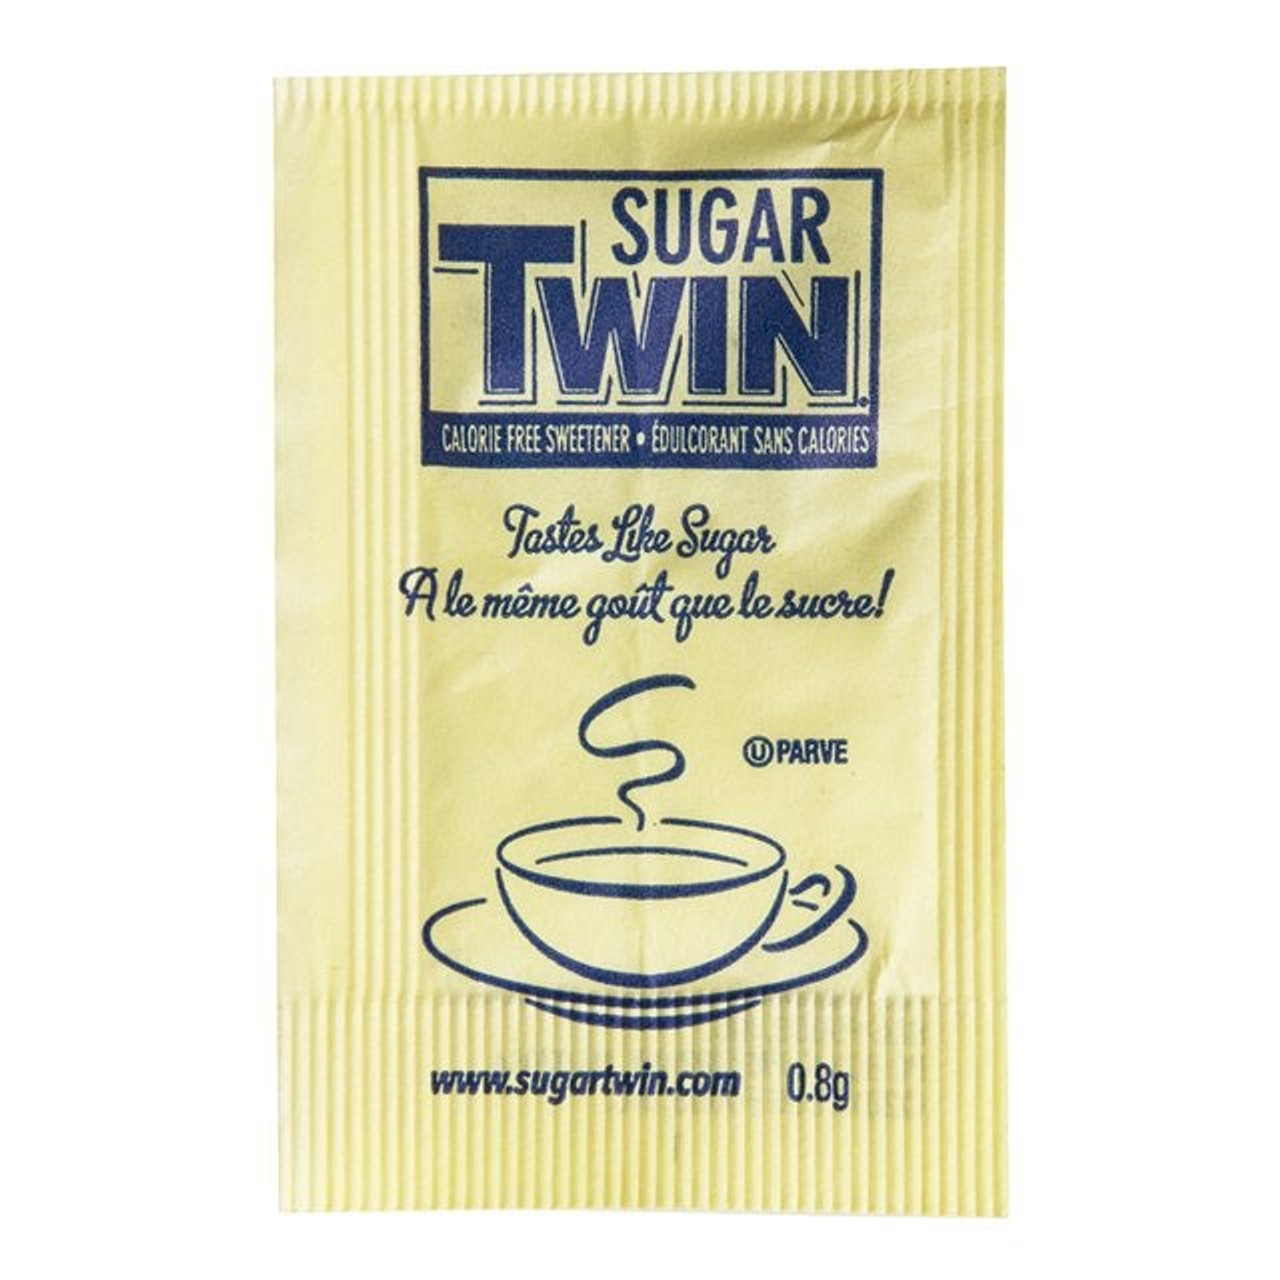 Sugar Twin Original Sugar Substitute Sweetener, Twin | 1000UN/Unit, 3 Units/Case